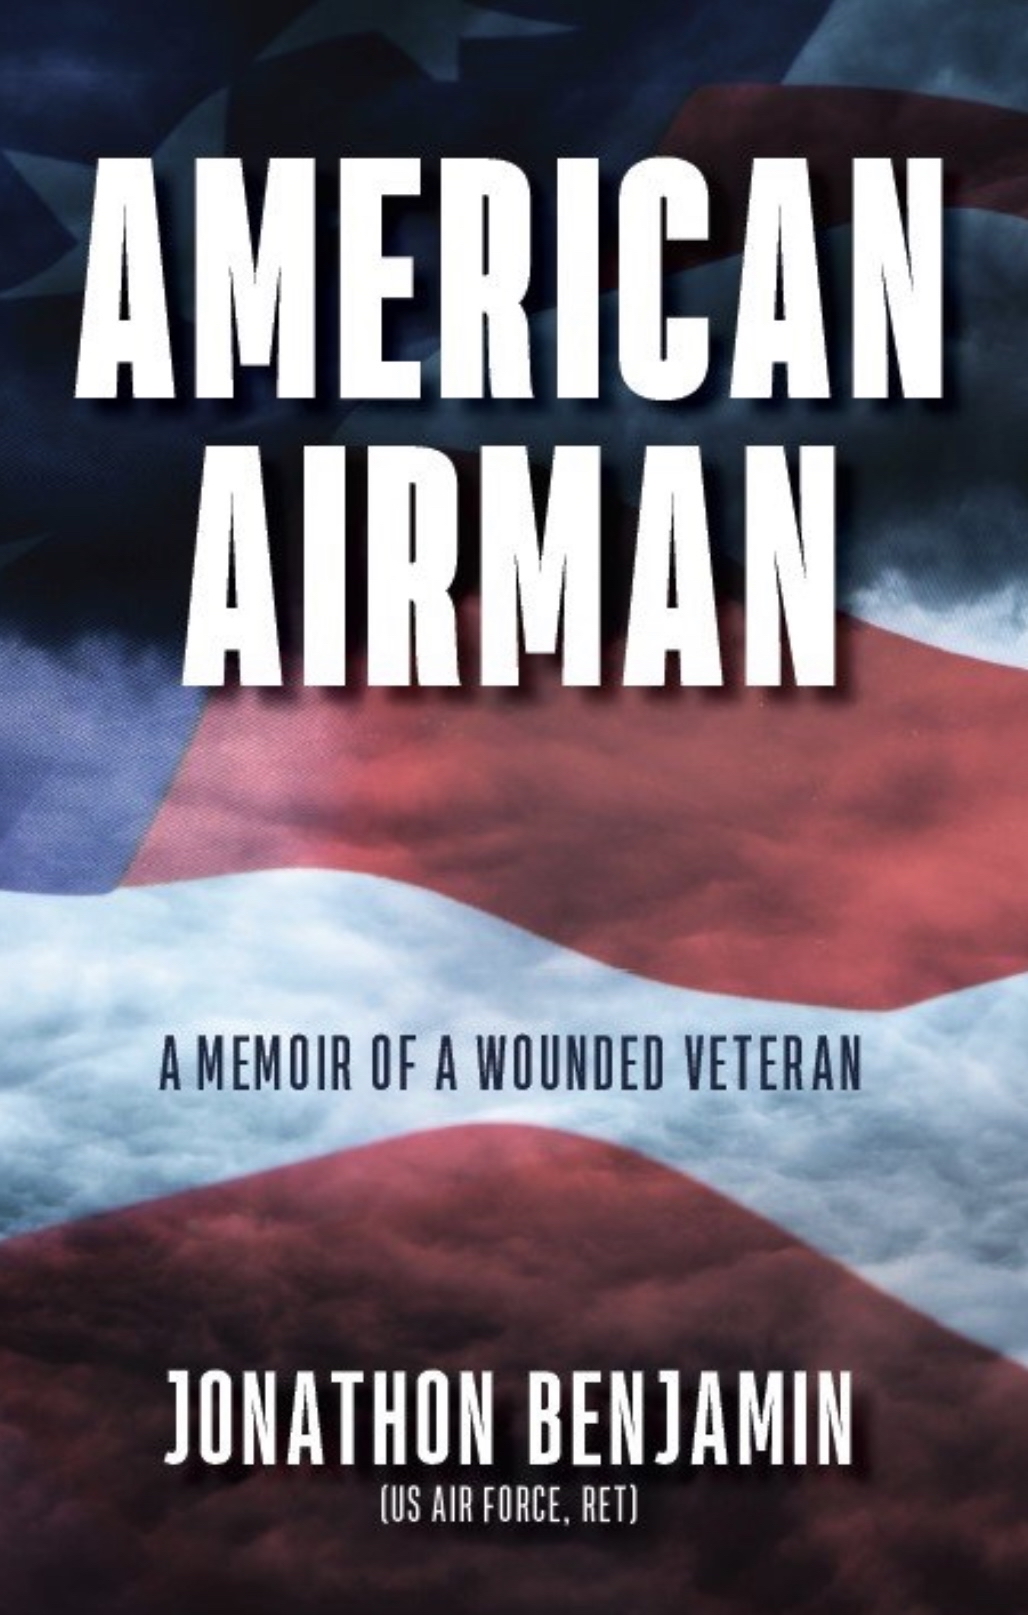 American Airman by Jonathon Benjamin